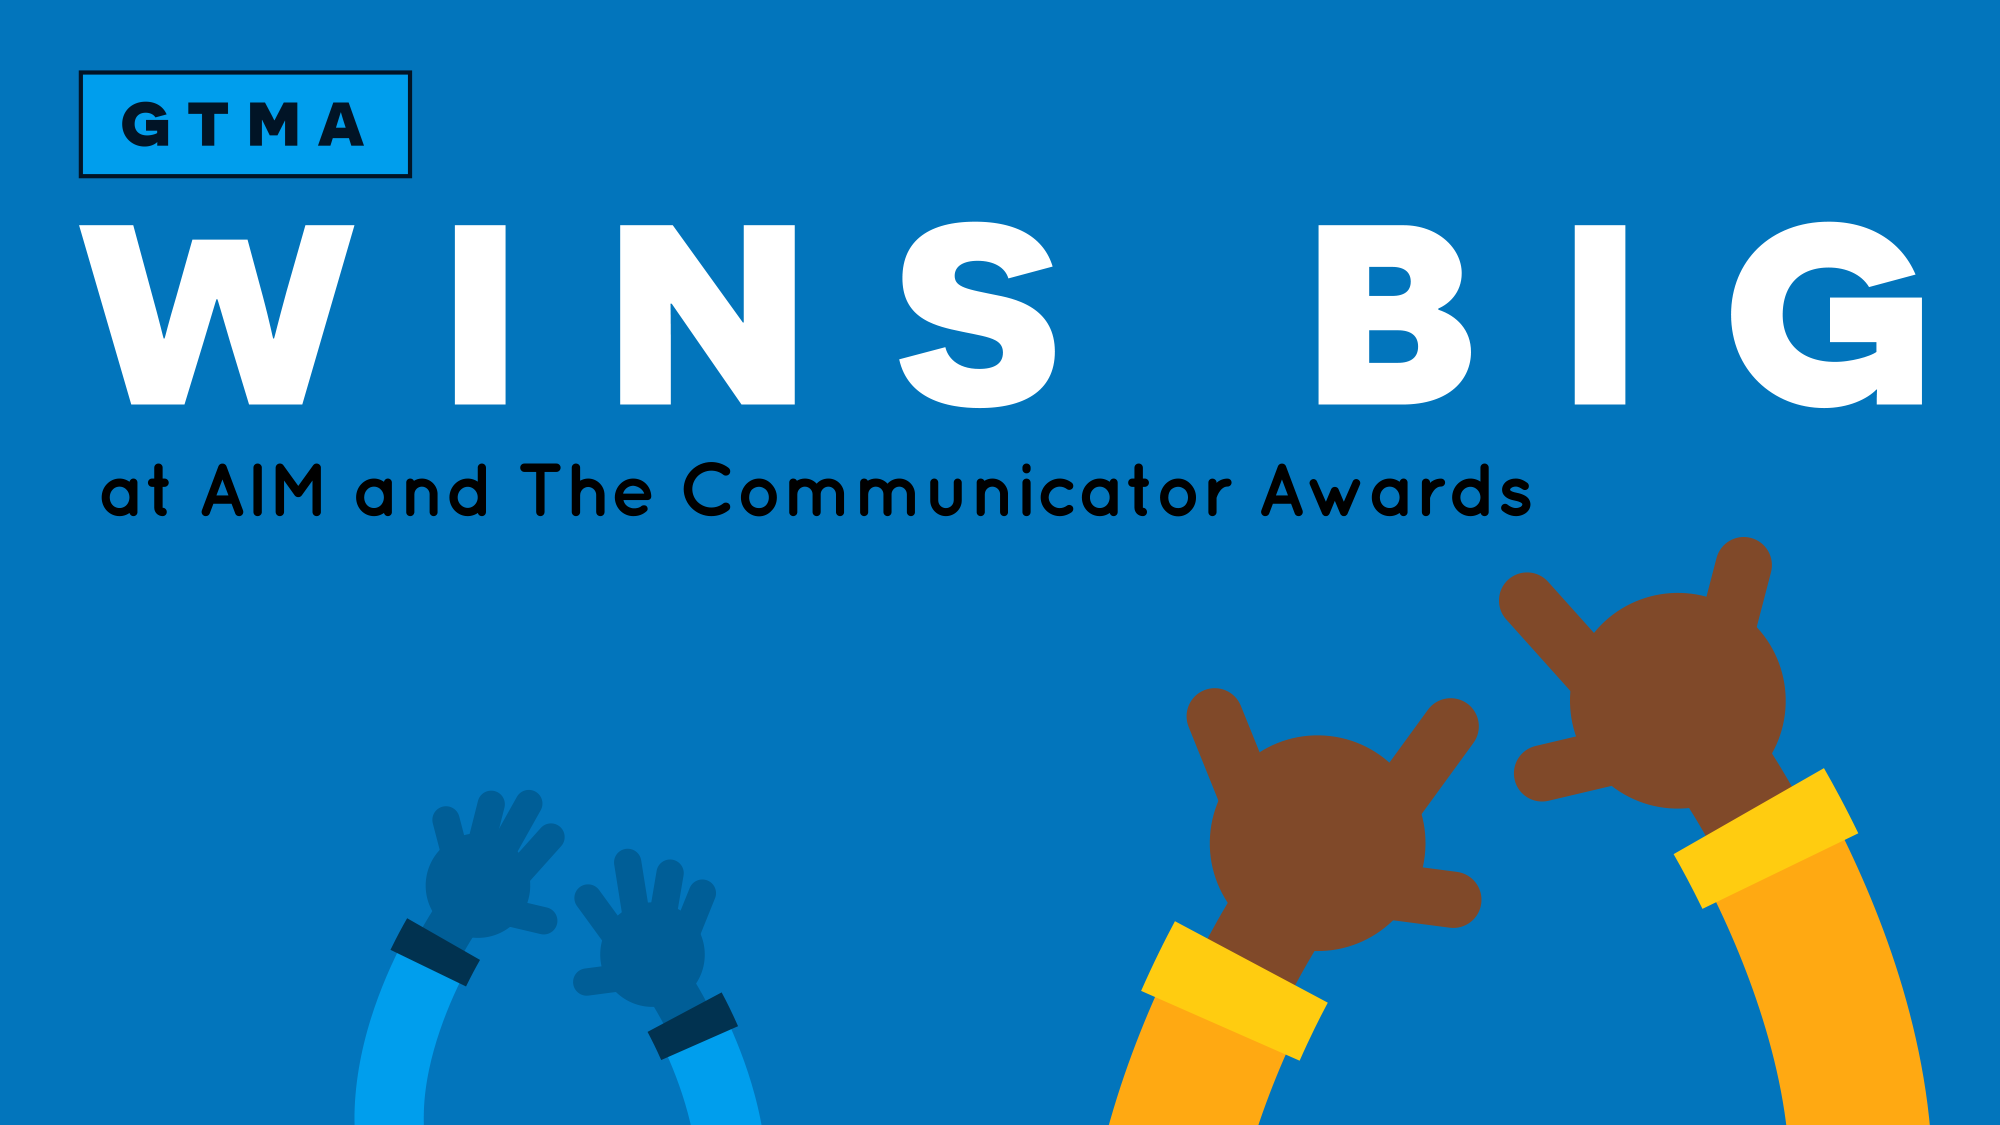 GTMA wins big at both AIM and the Communicator Awards!